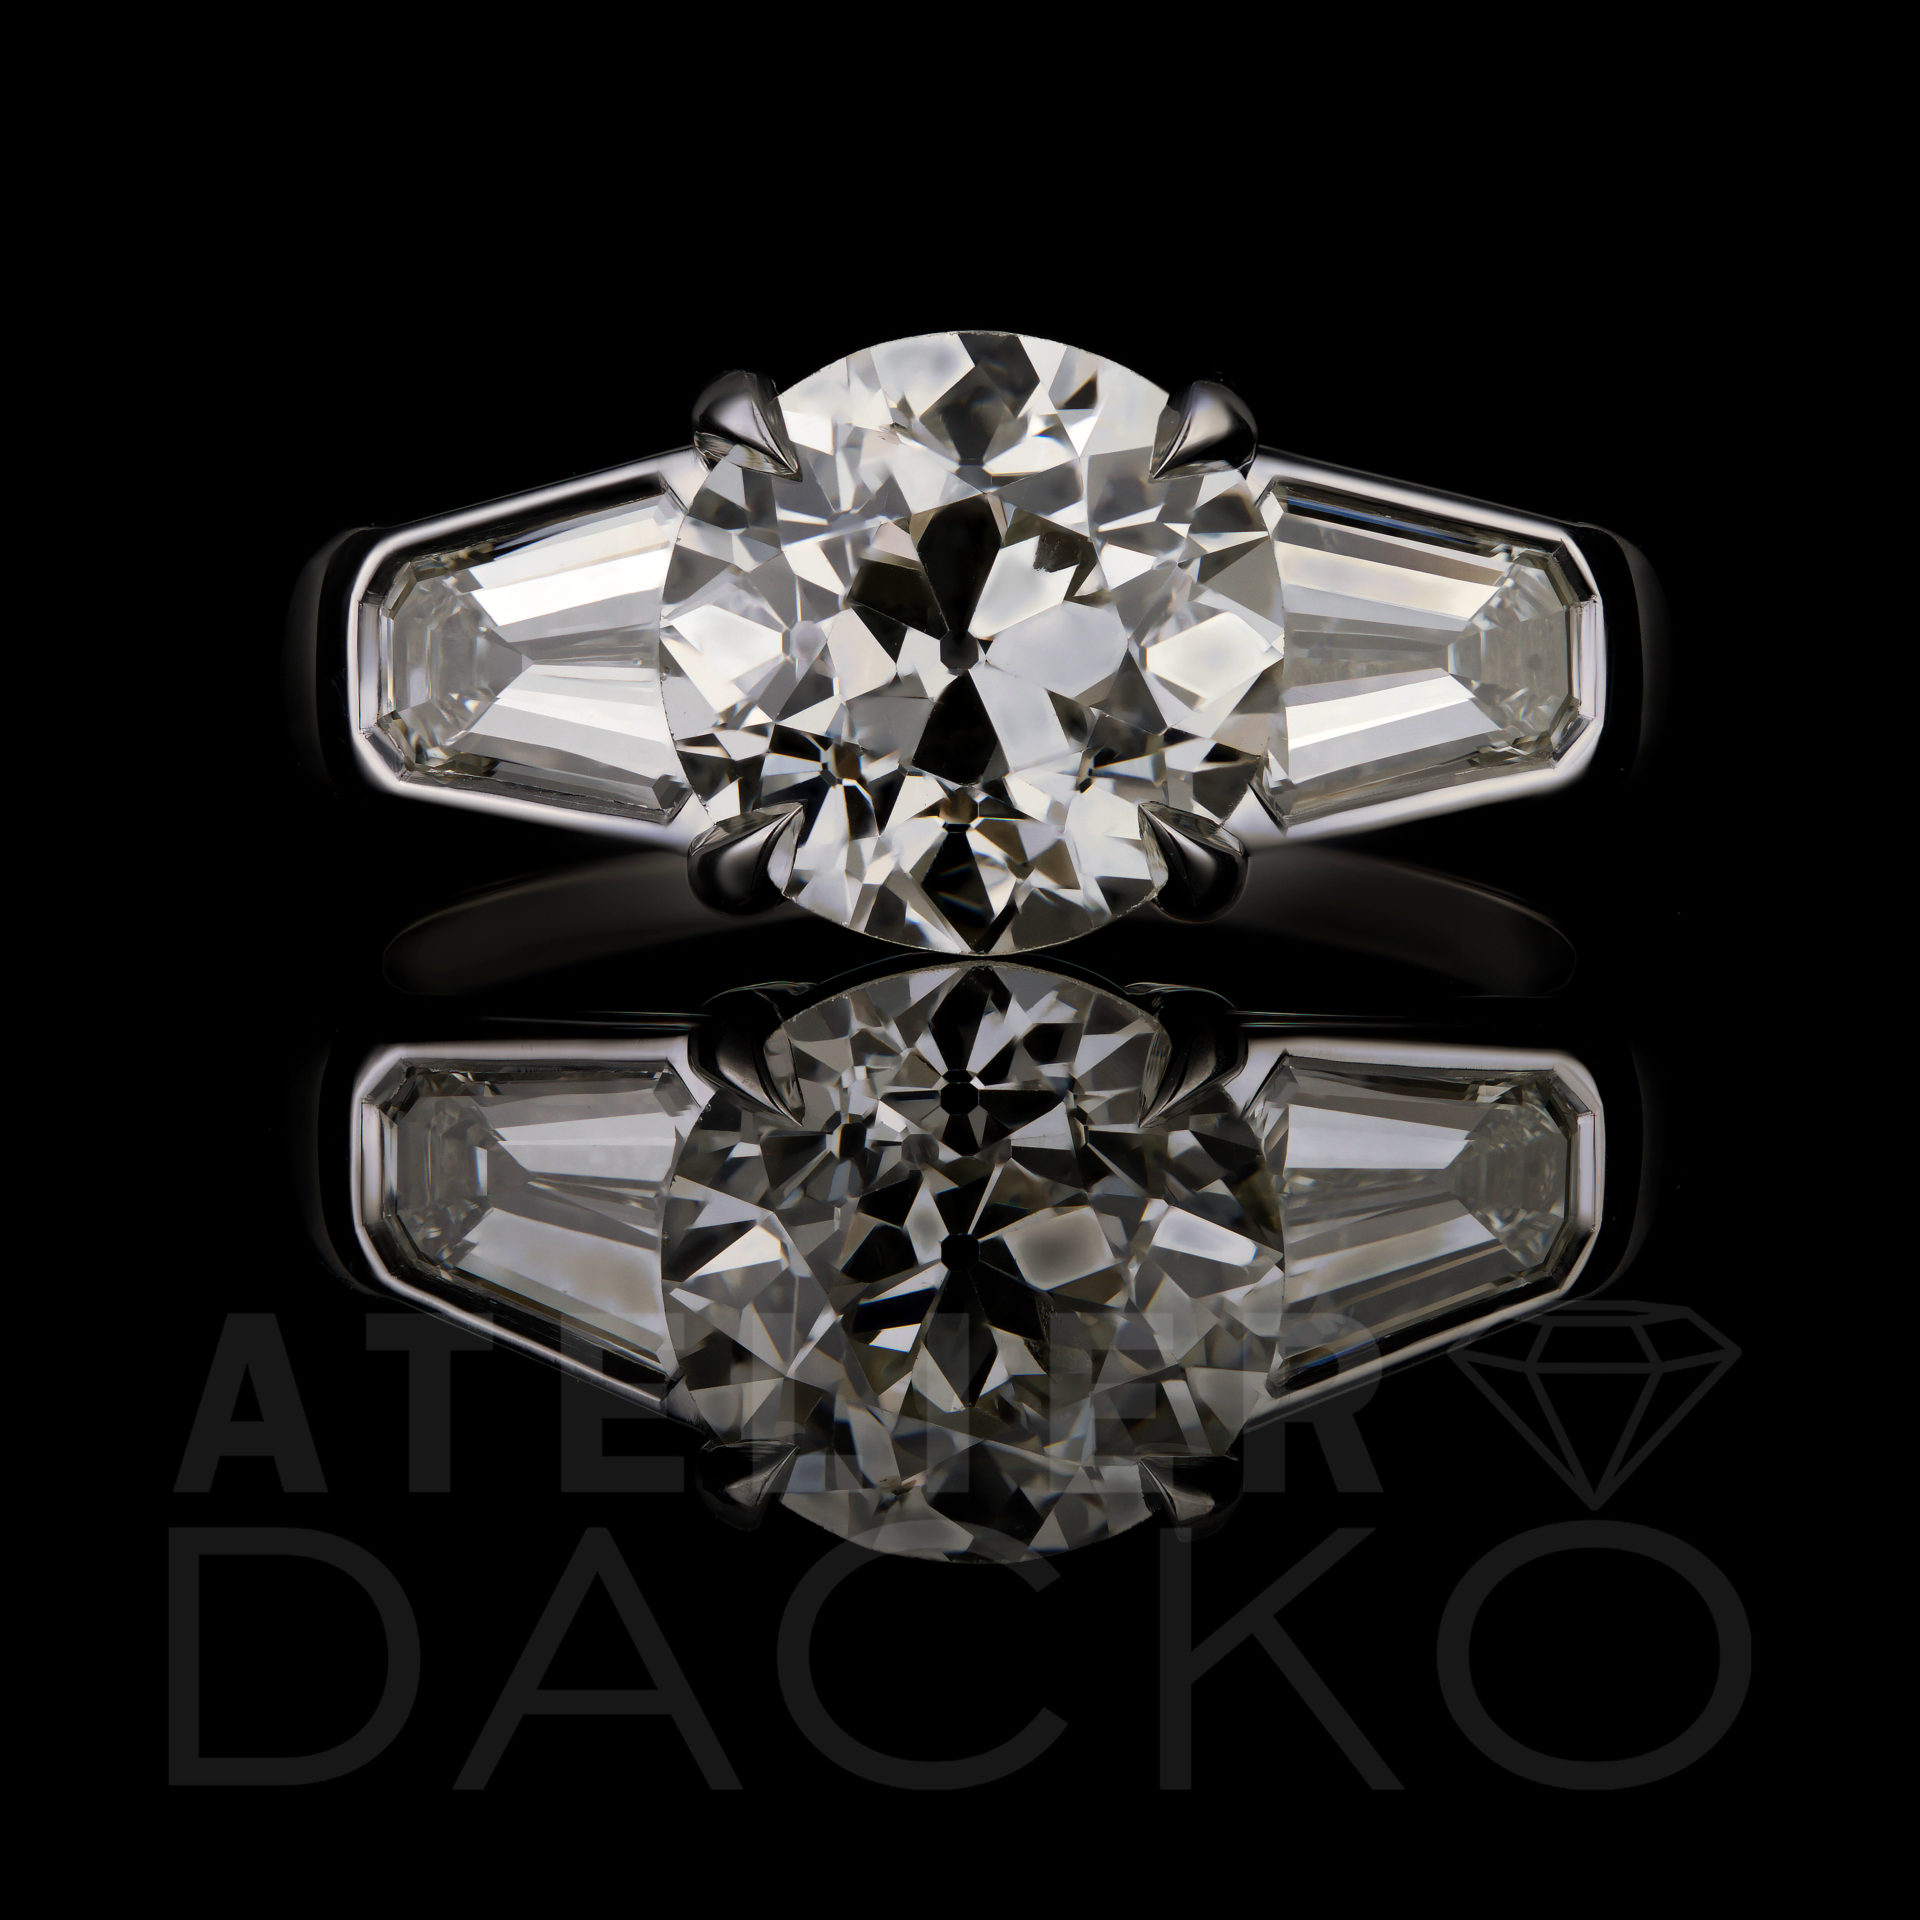 AD013 - 1.91 CT Vintage Inspired Old European Cut Diamond Ring - 1